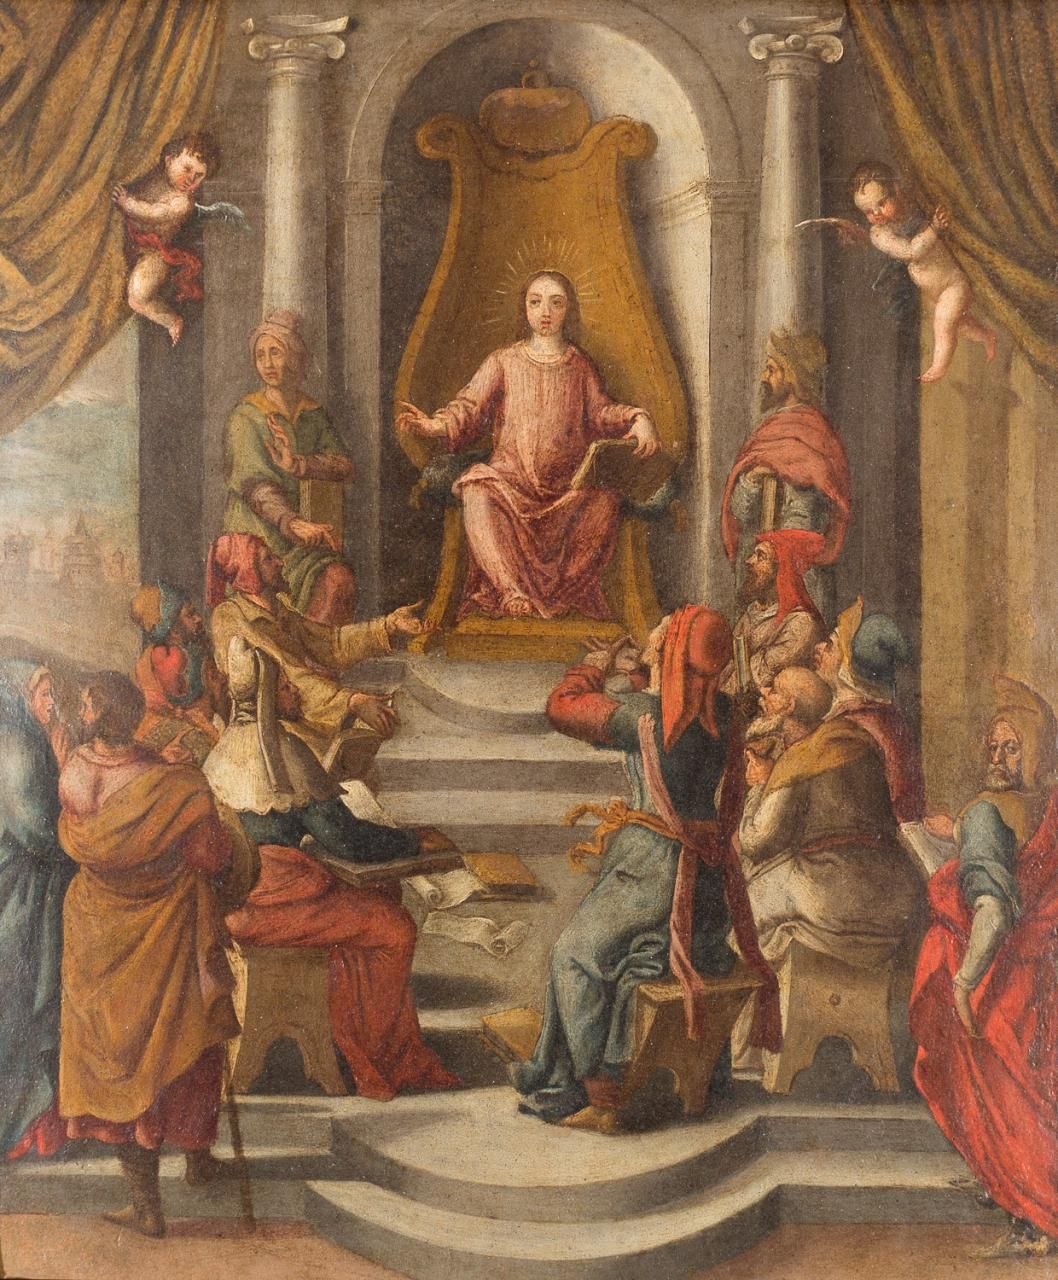 ESCUELA FLAMENCA, S. XVII Jesus among the doctors
Oil on copper
38 x 32 cm